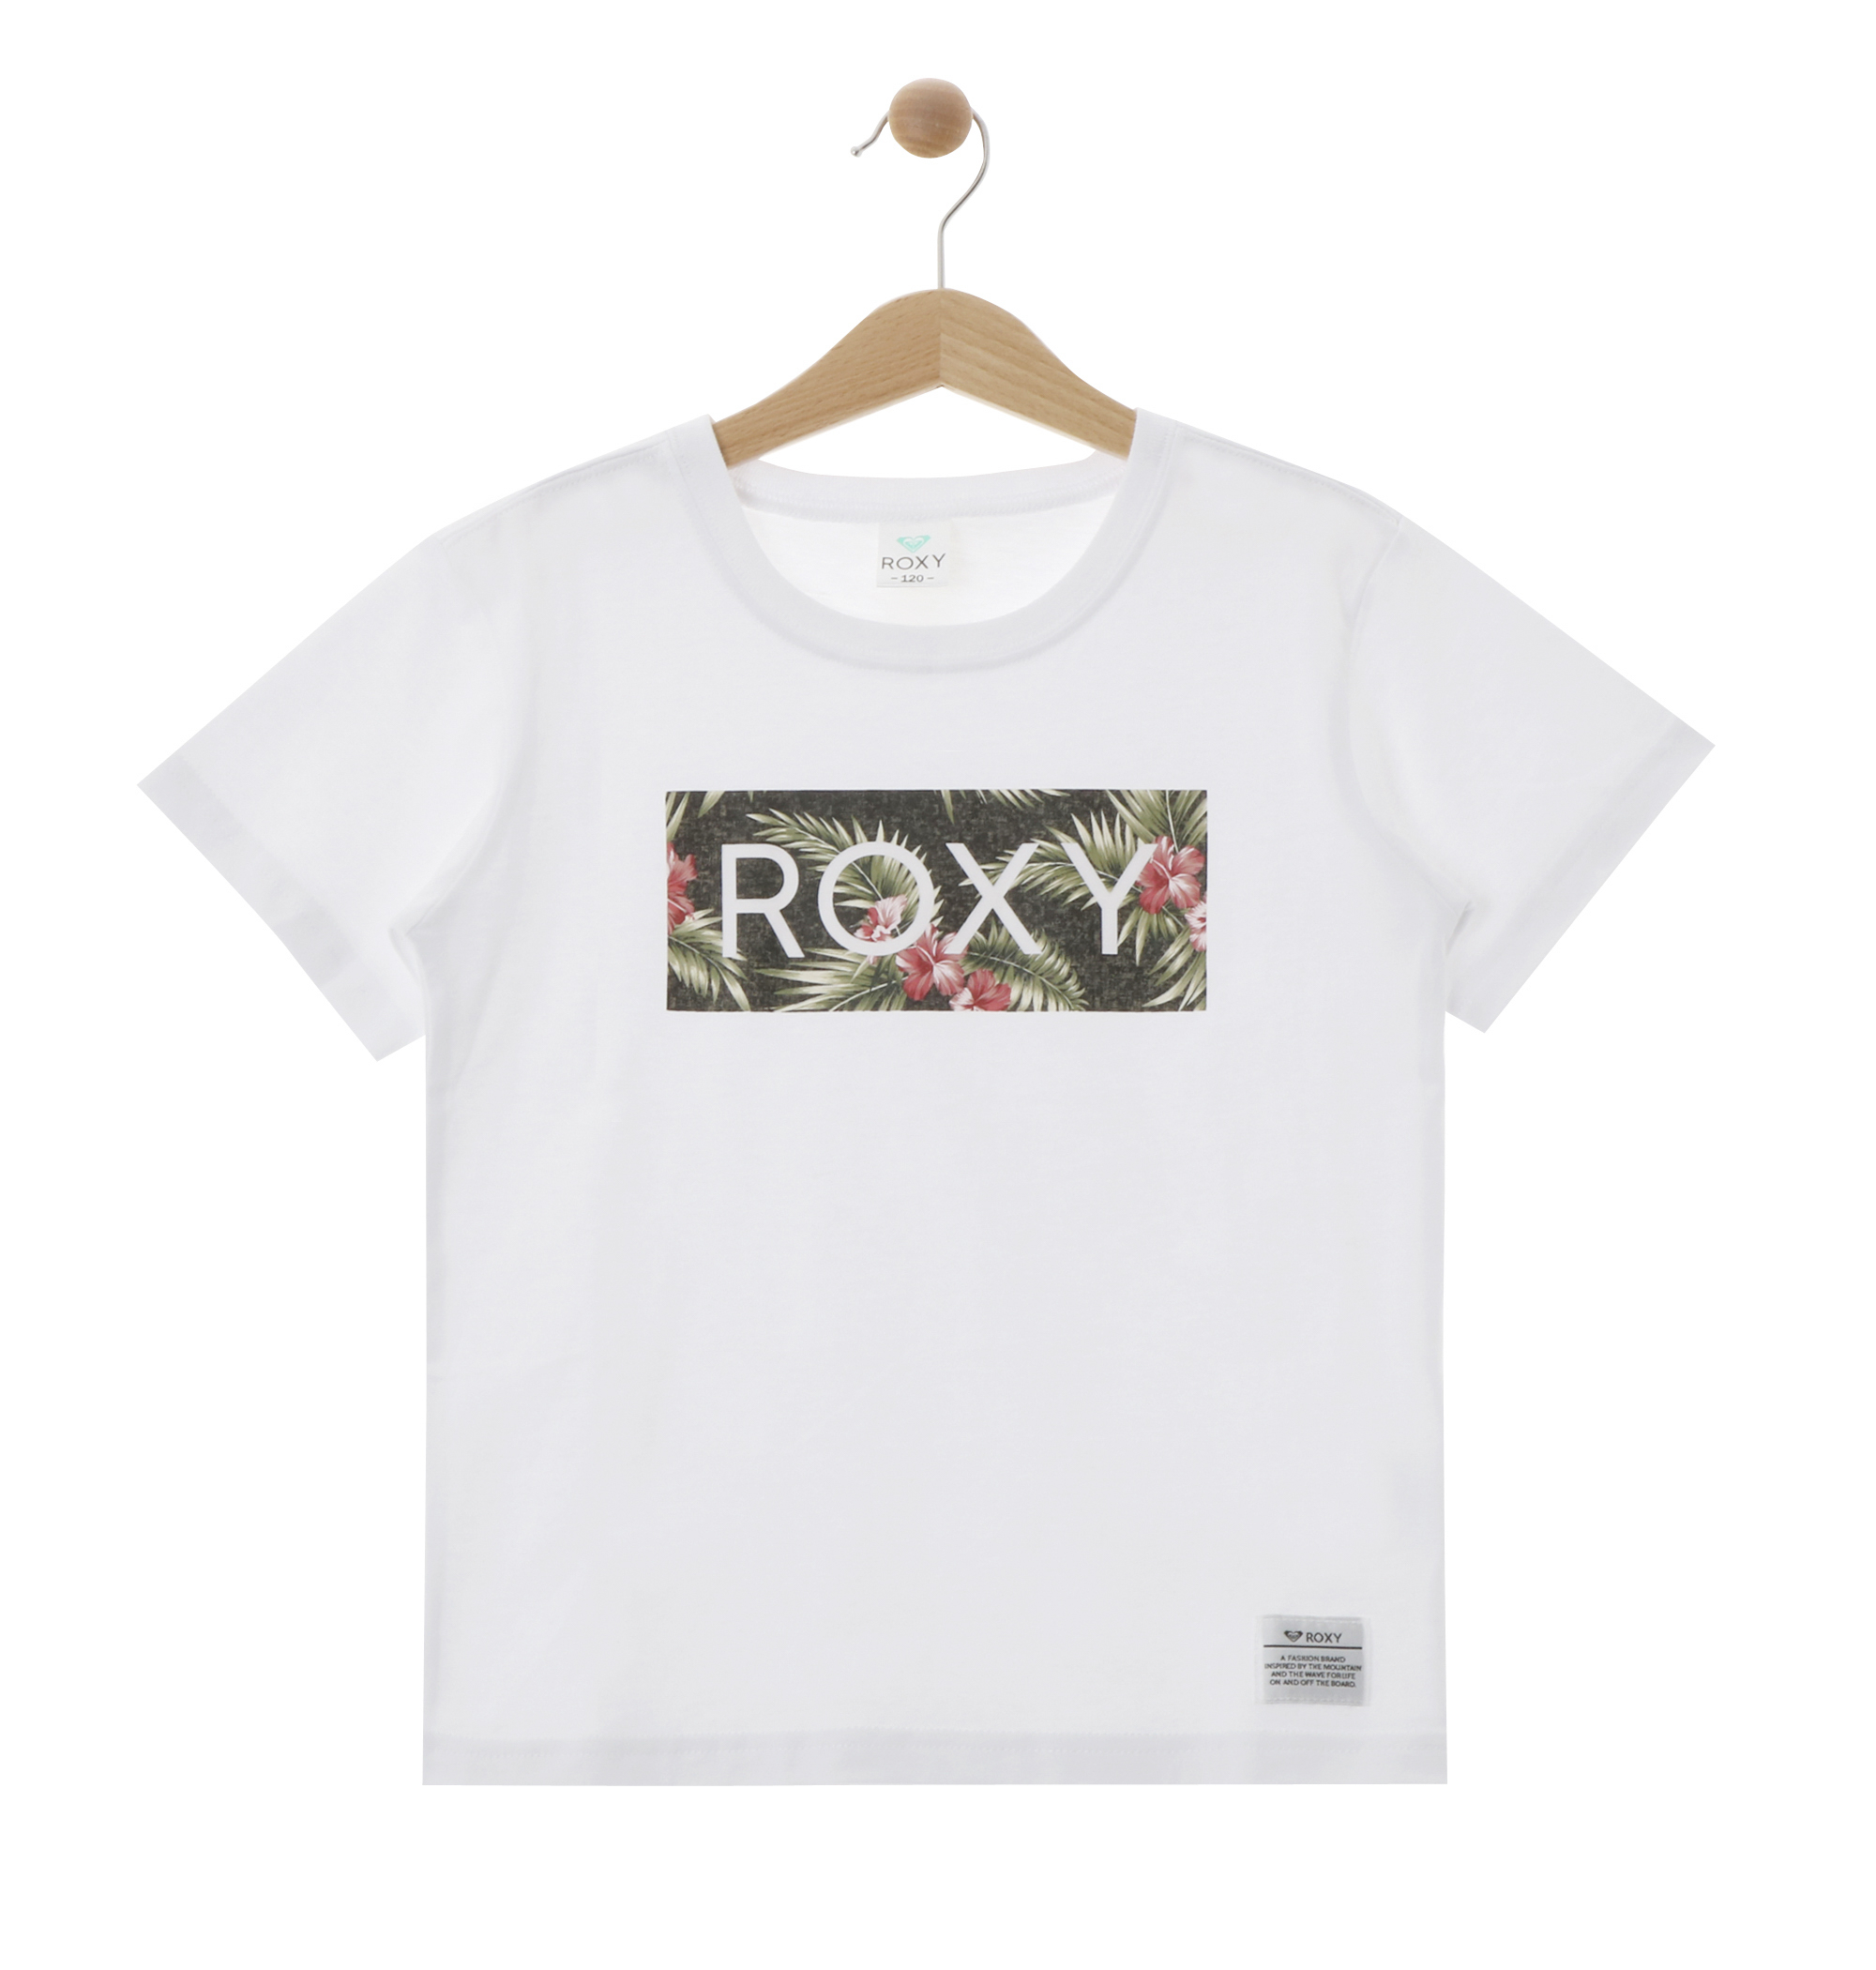 30%OFF！＜Roxy＞MINI TROPICAL FOREST ROXY ボタニカル柄にロゴを重ねたレクタングルプリントの半袖Tシャツ